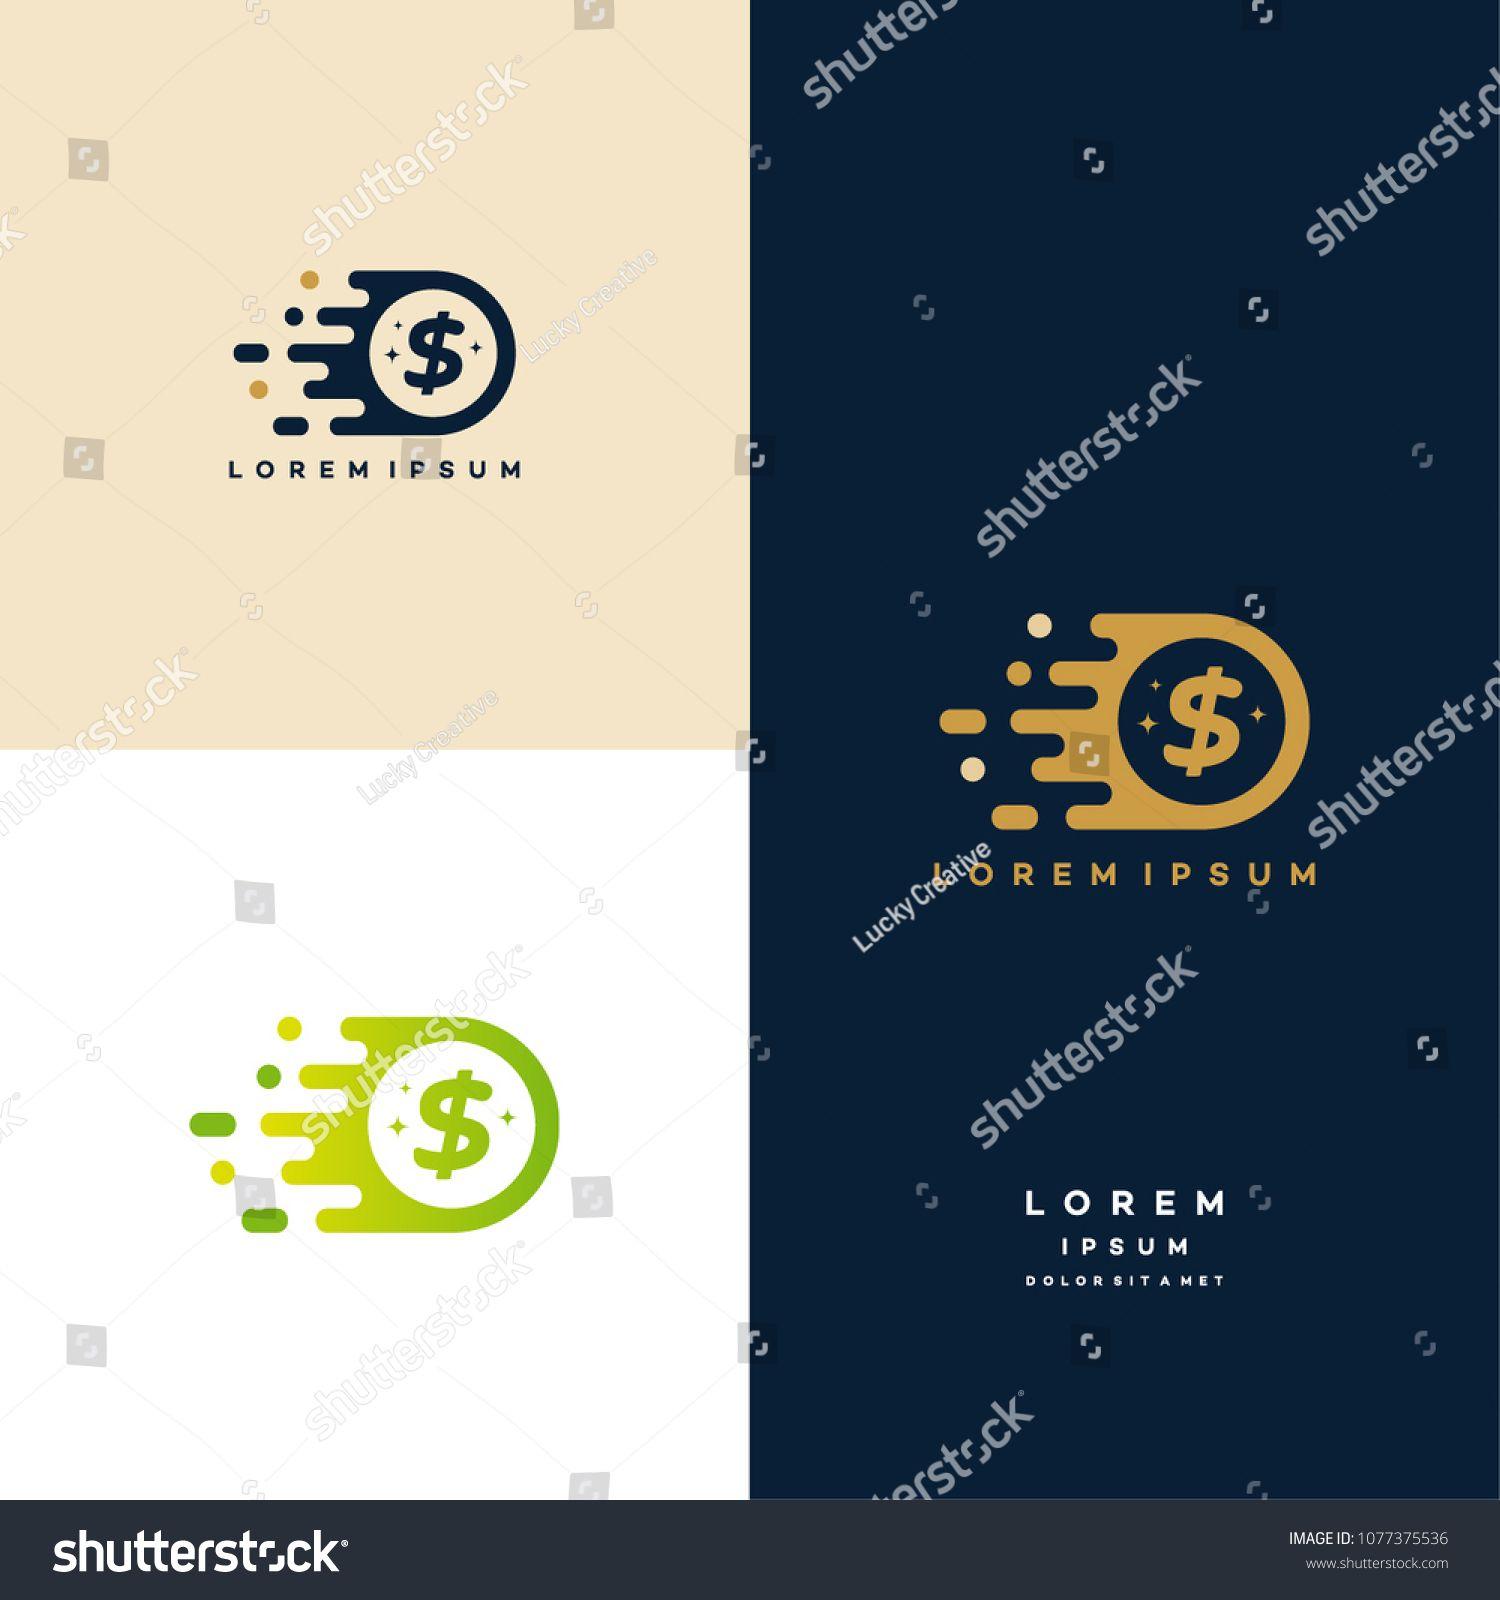 Fast Cash Logo - Fast Coin Logo designs concept vector, Fast Cash logo template ...